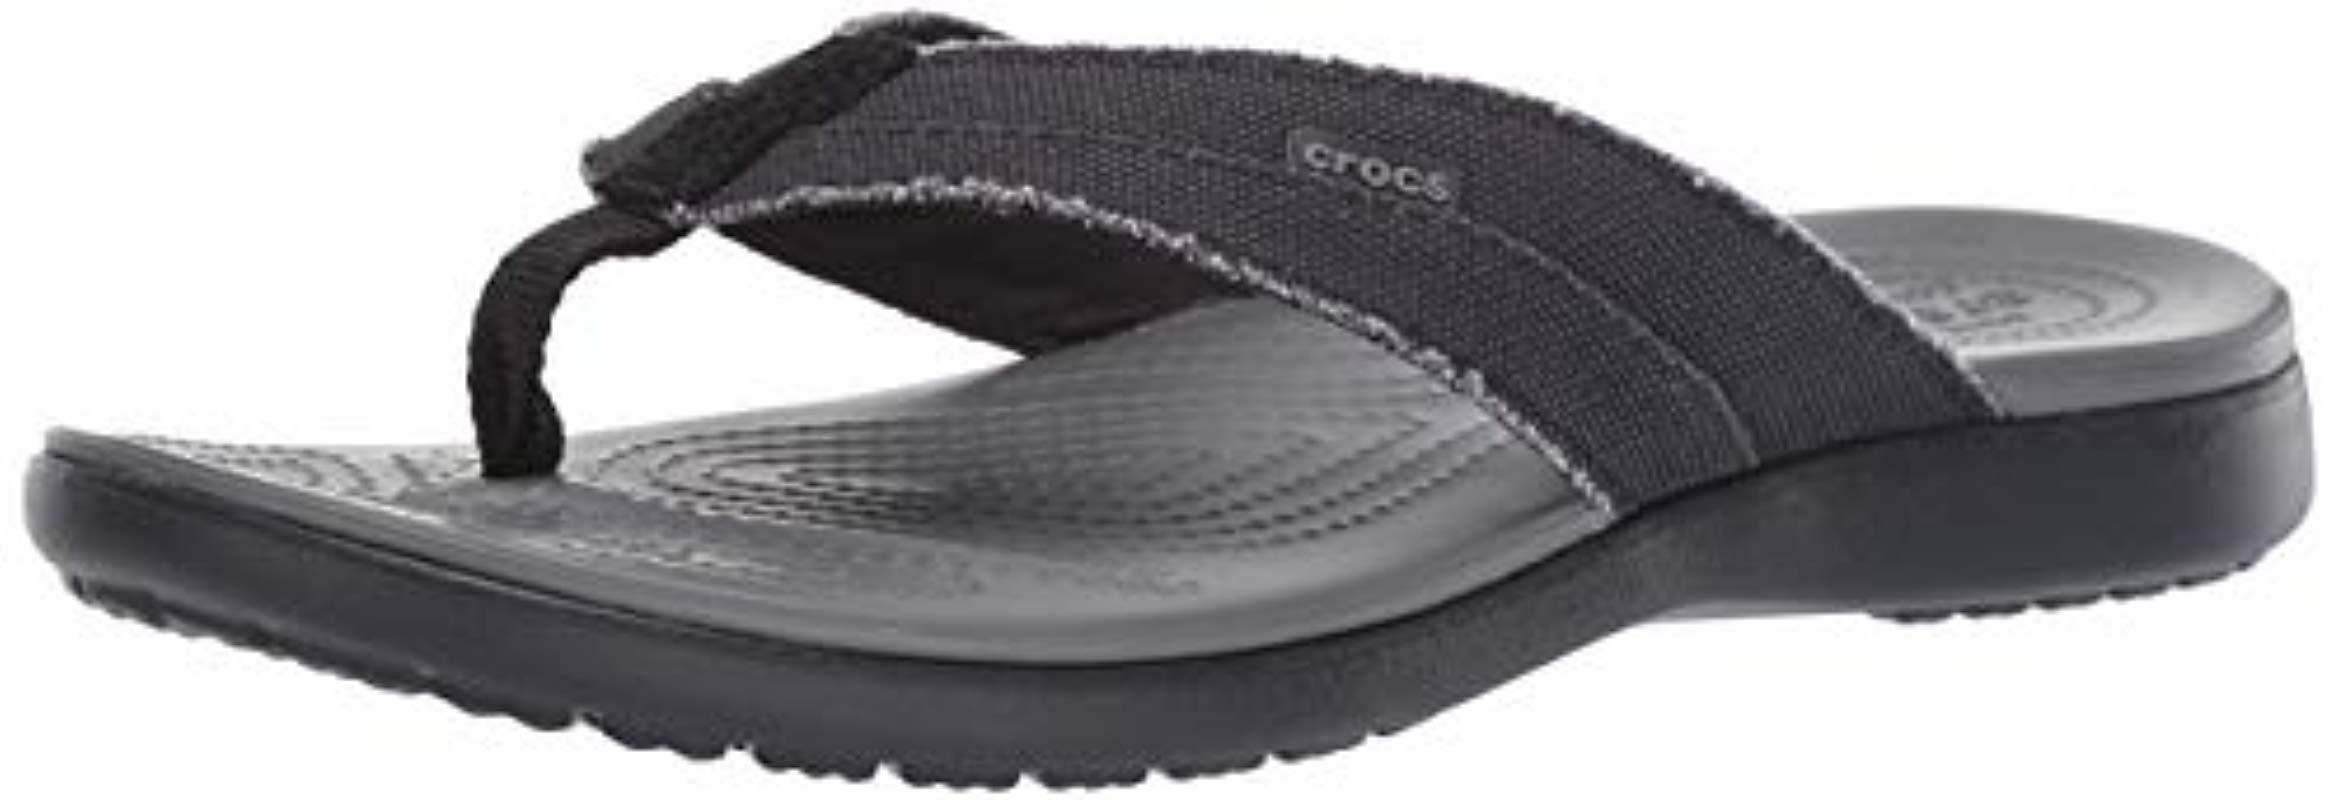 Crocs™ Santa Cruz Canvas Flip Flop in Black/Slate Grey (Gray) for Men ...